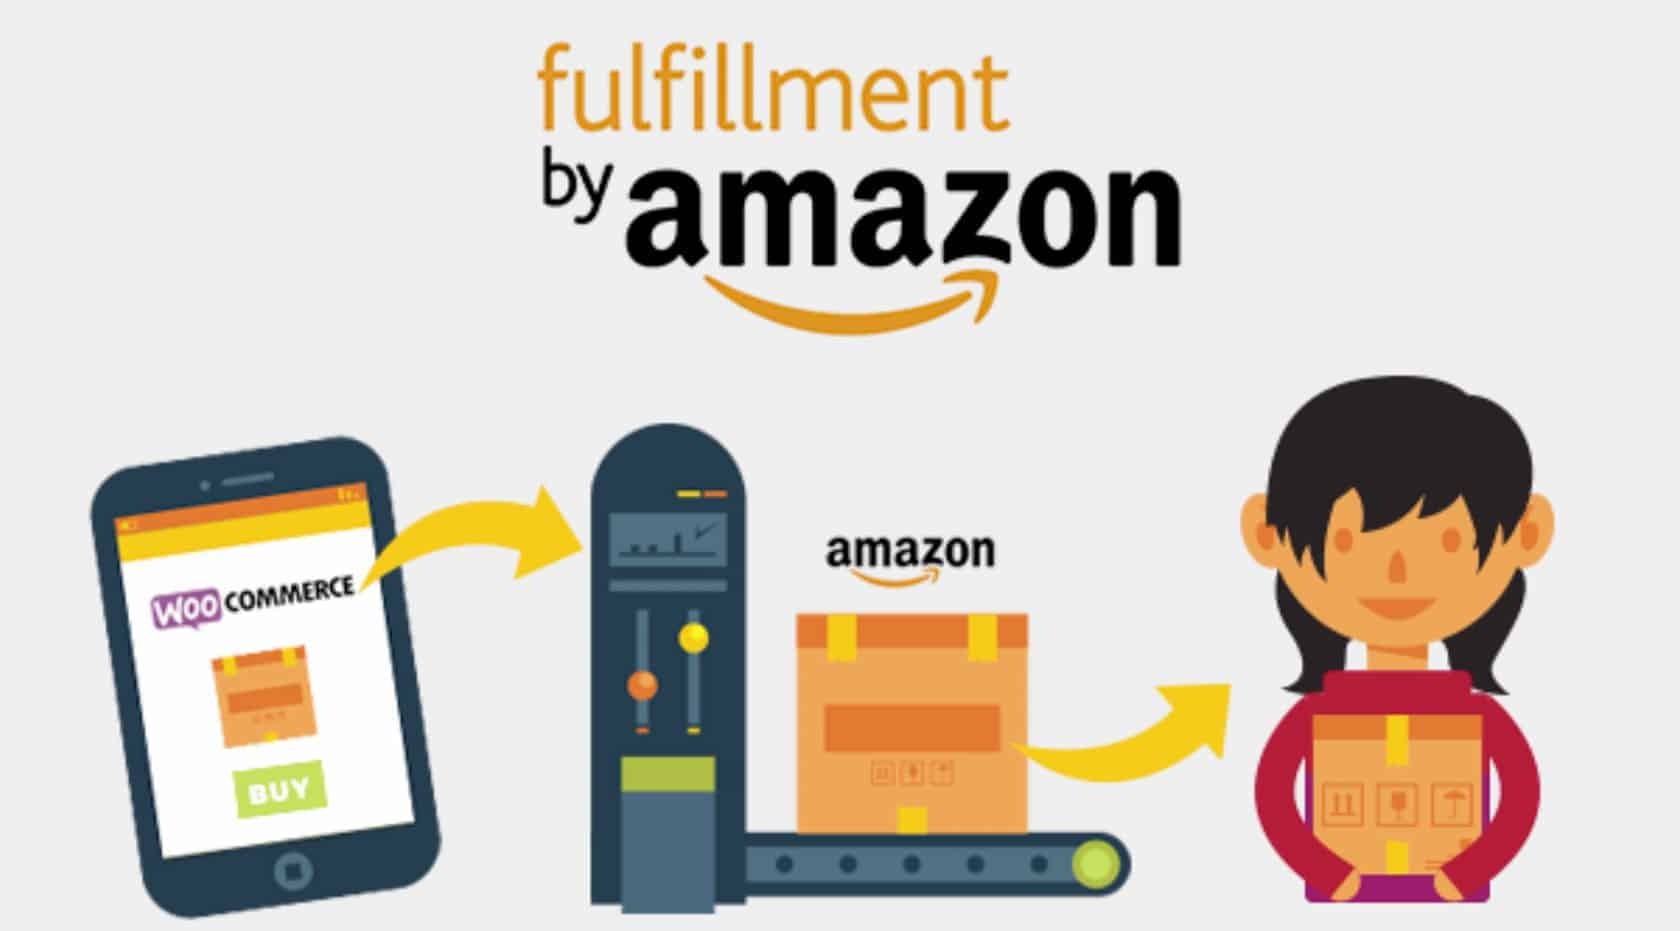 WooCommerce Amazon Fulfillment - Amazon Fulfillment WooCommerce v4.2.2 by Woocommerce Nulled Free Download